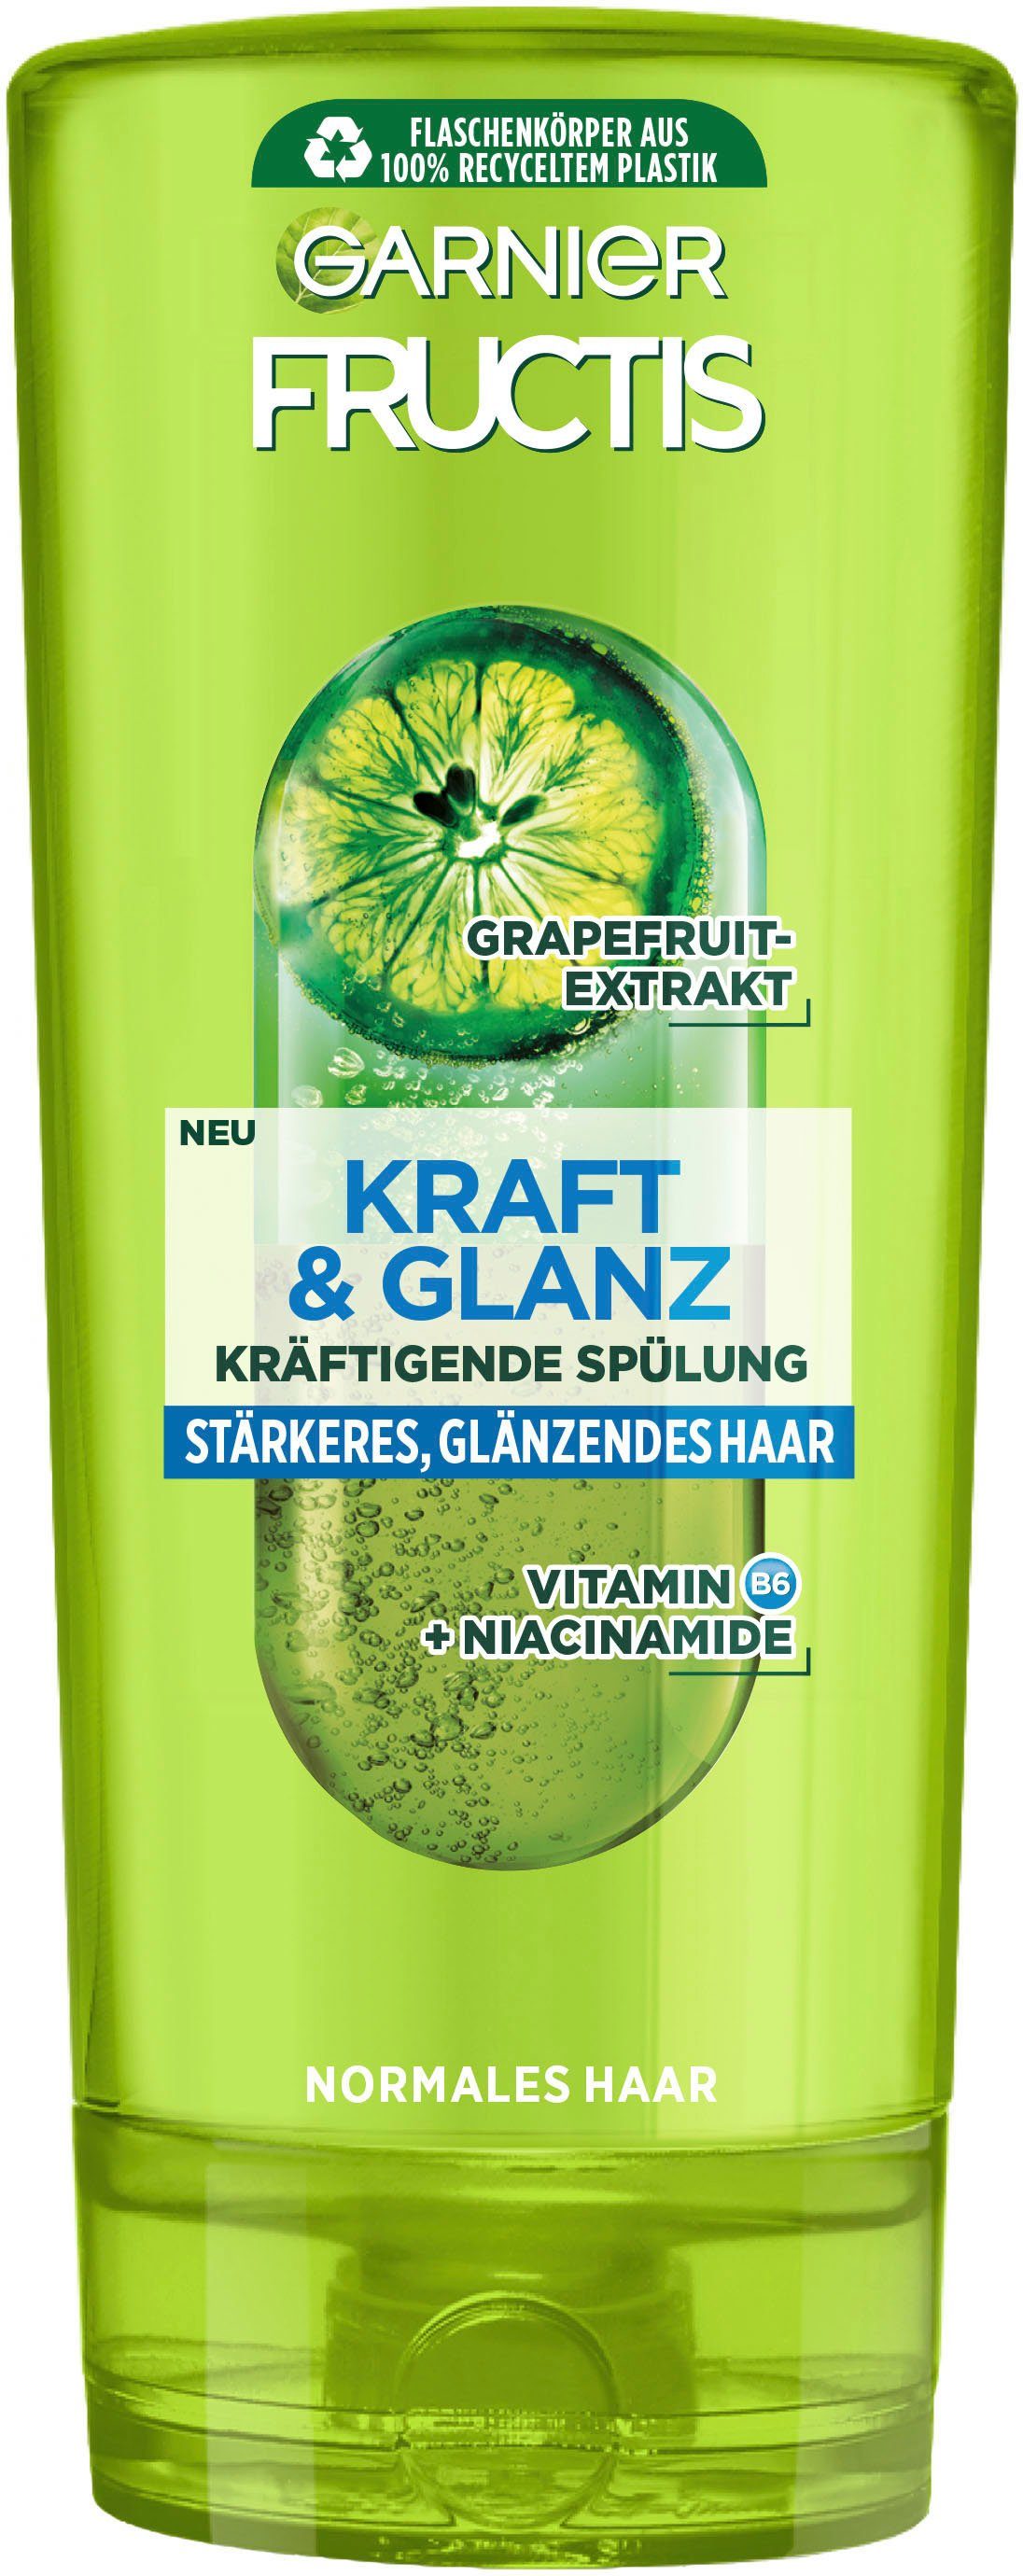 GARNIER Haarspülung Kraft Glanz & Fructis Garnier Set, Spülung, 6-tlg